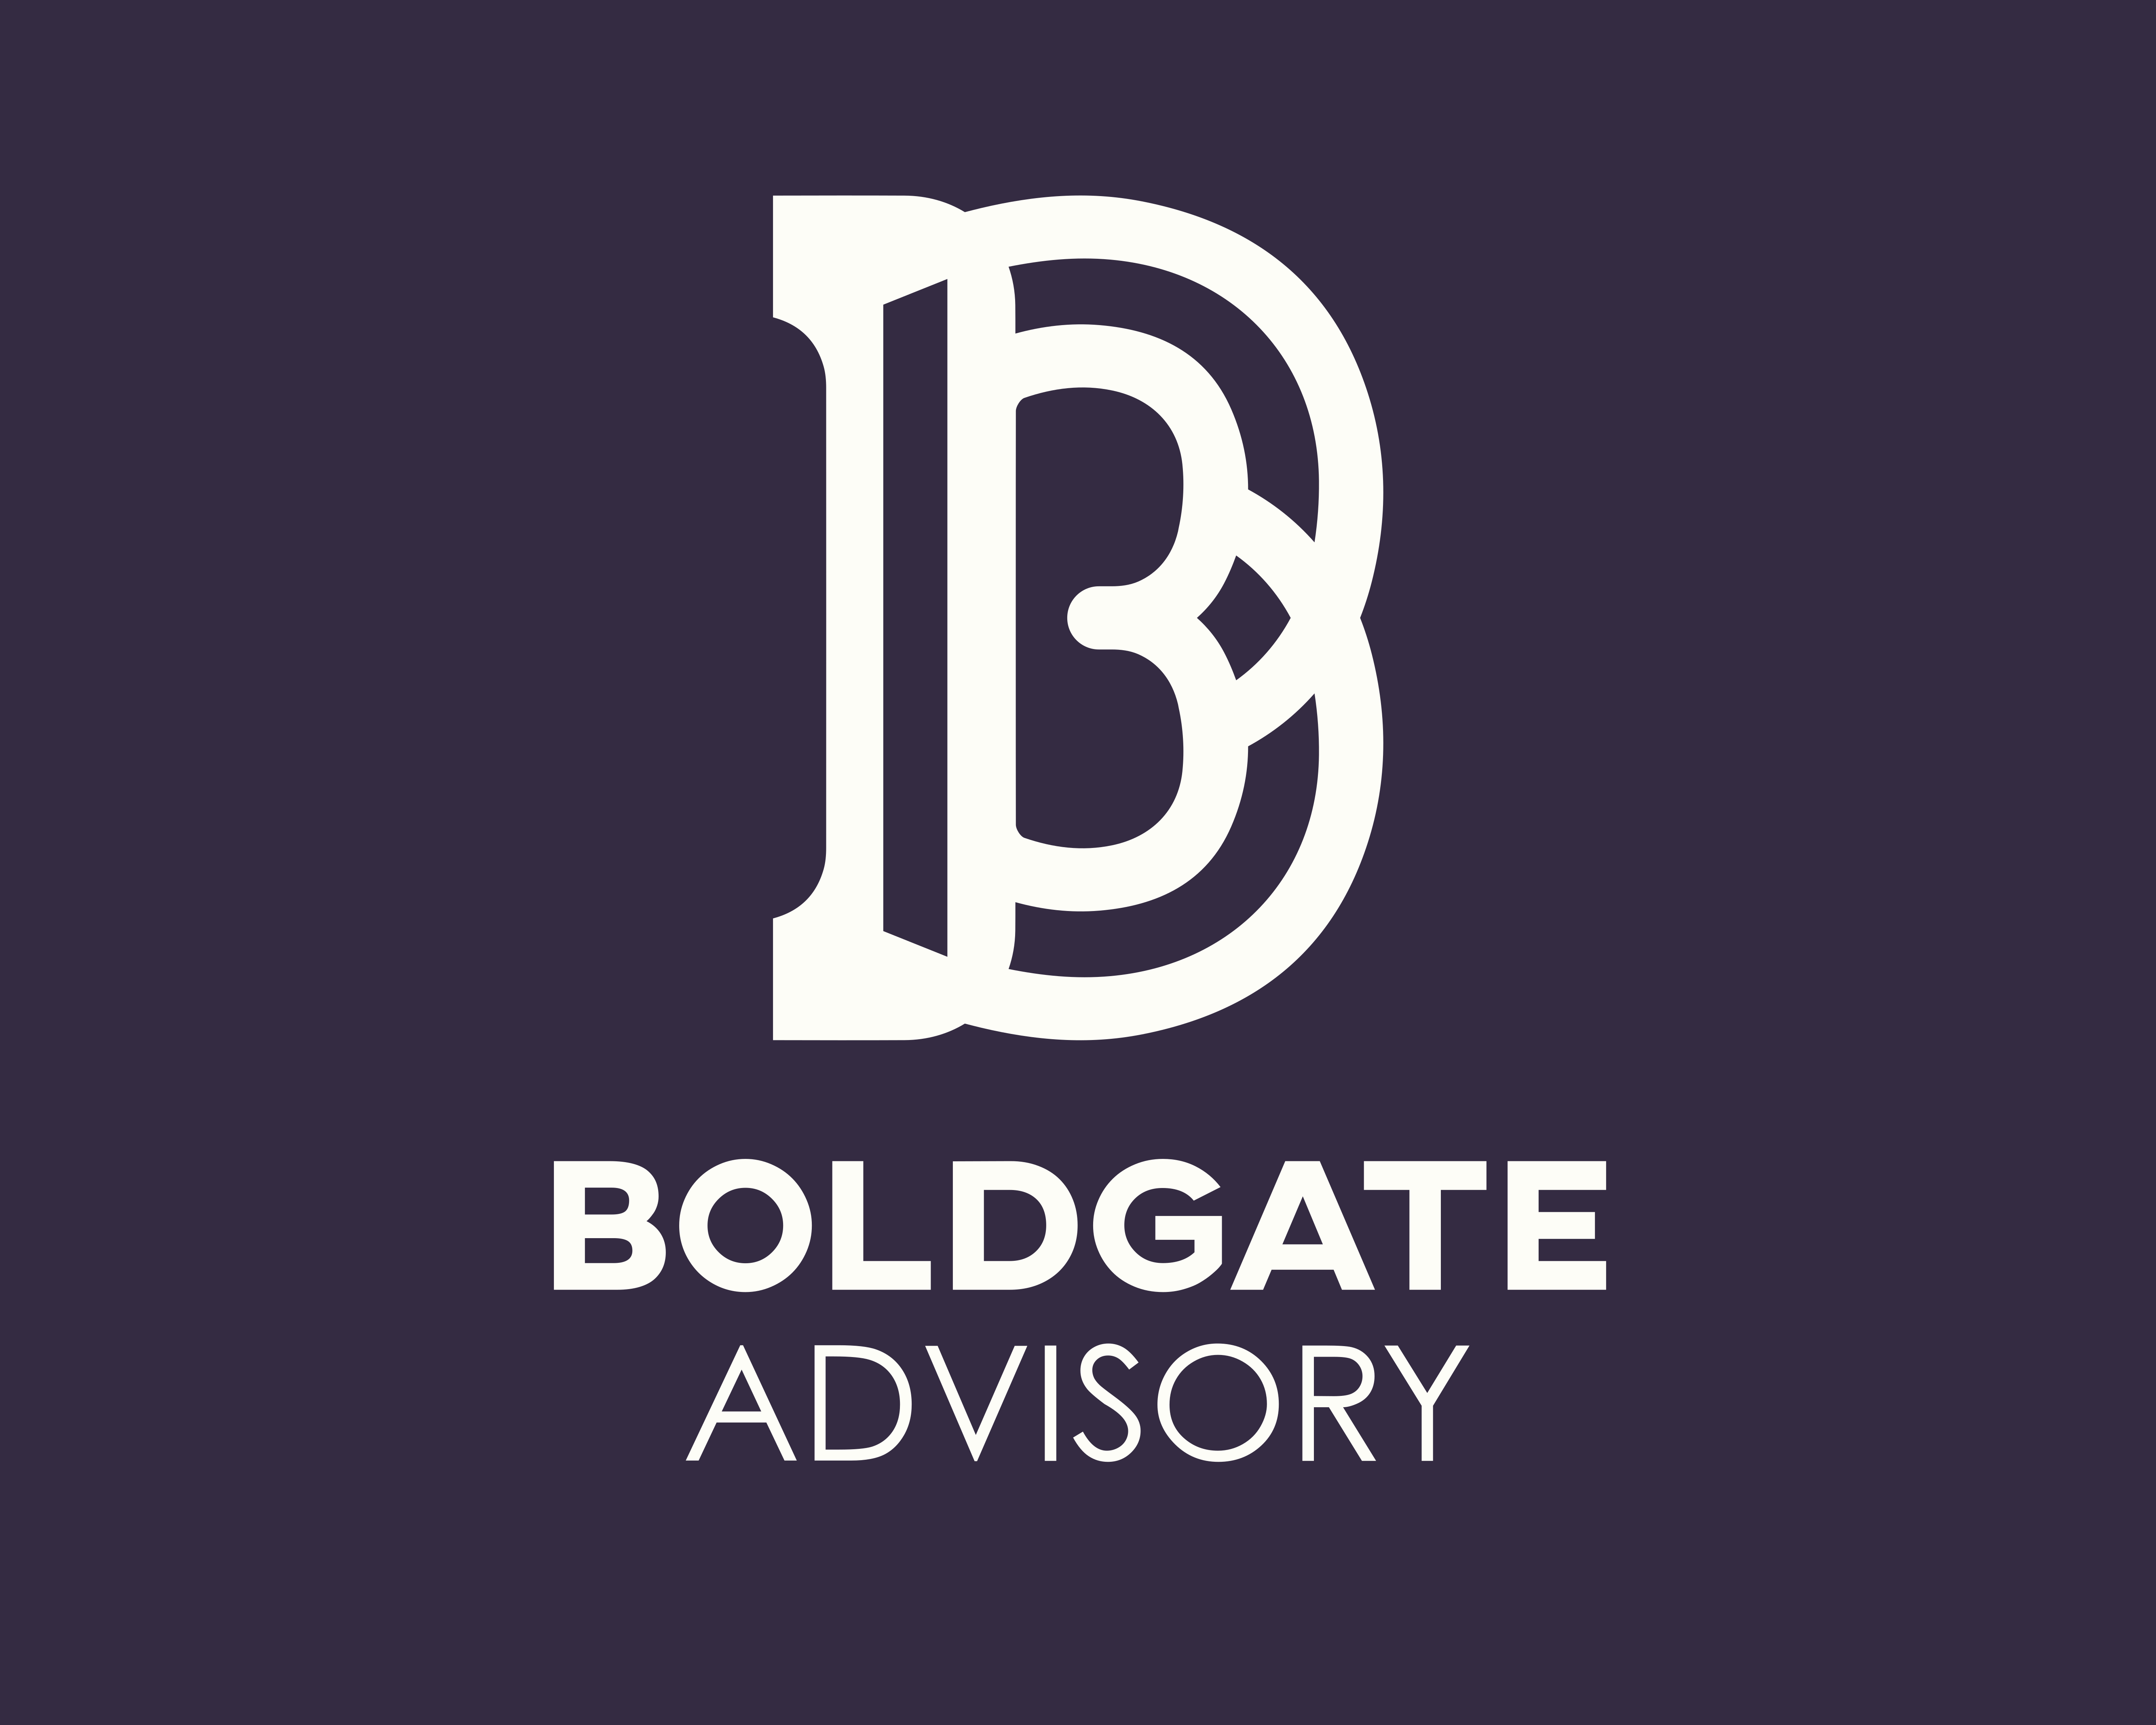 Boldgate Advisory Ltd